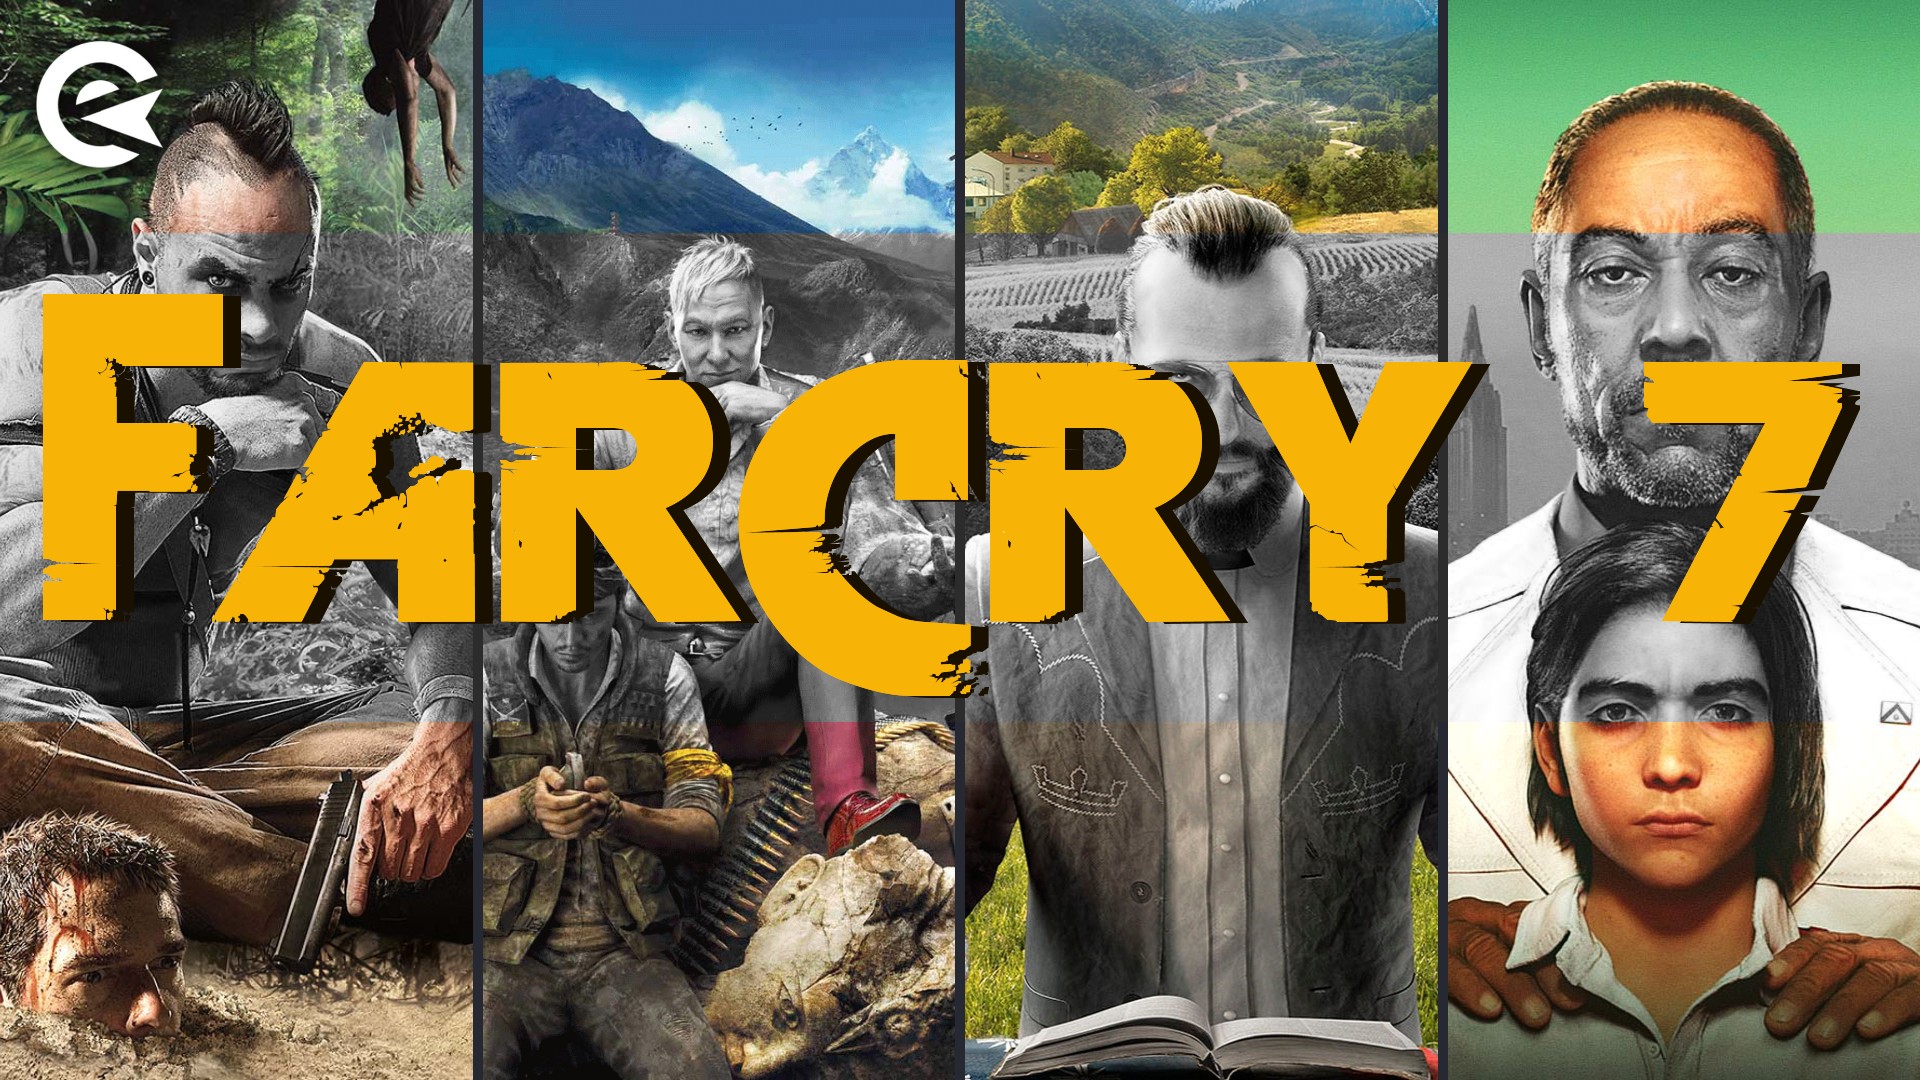 Far cry 7 game